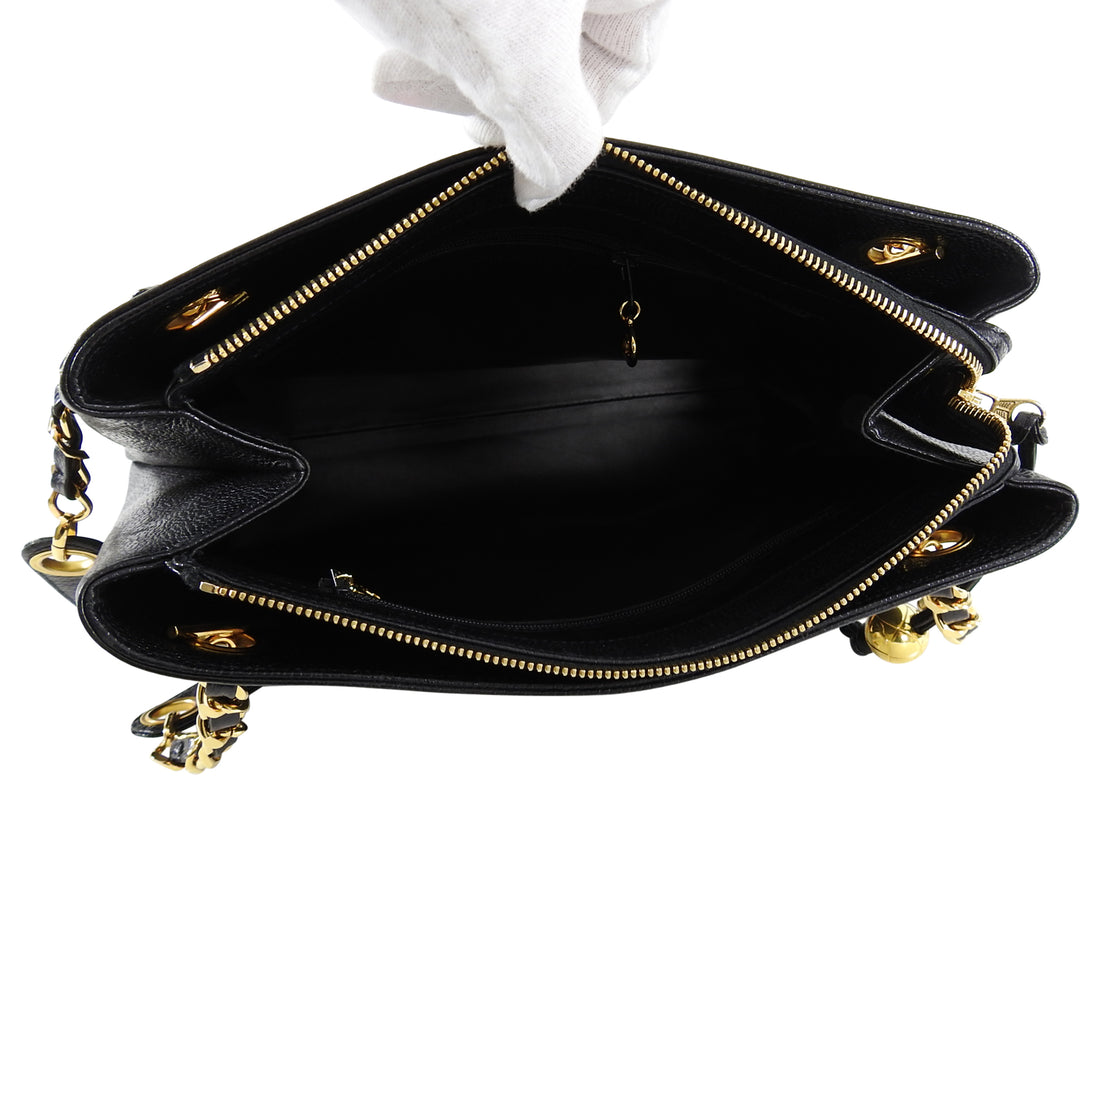 Chanel Vintage 1991 Black Caviar Leather CC Tote Bag